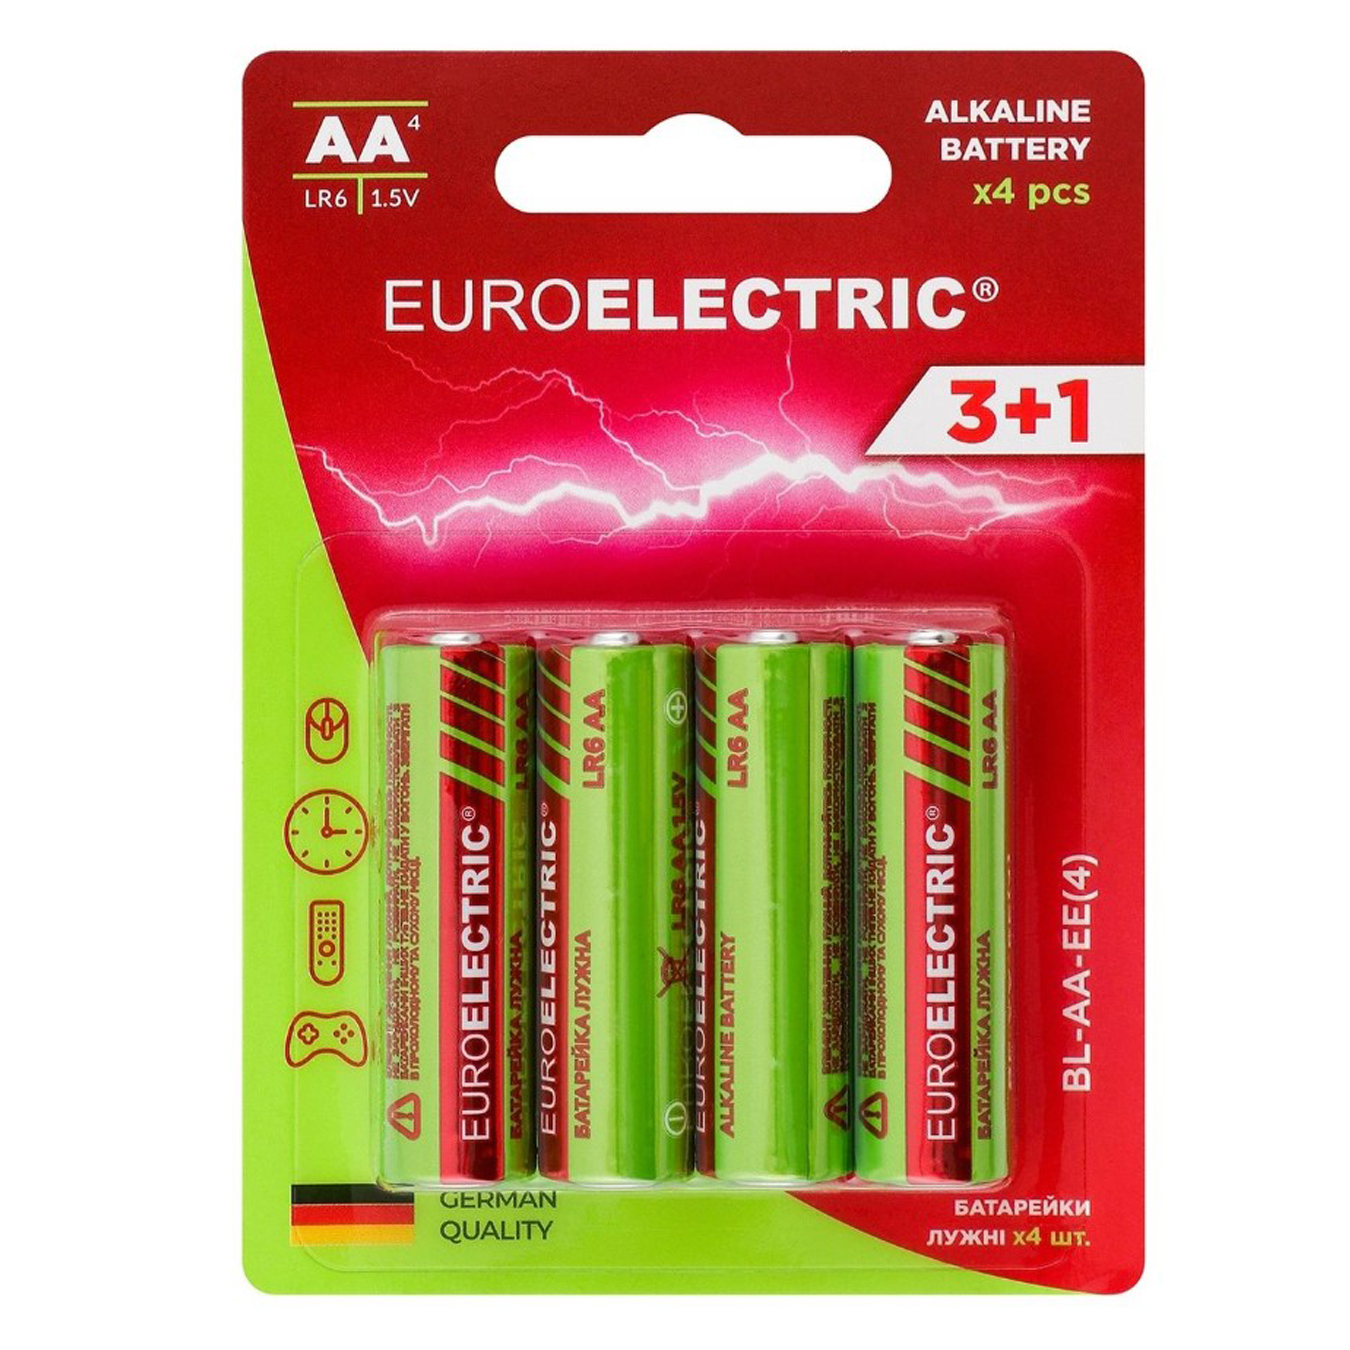 Euroelectric battery alkaline AA LR6 1.5V 4pcs